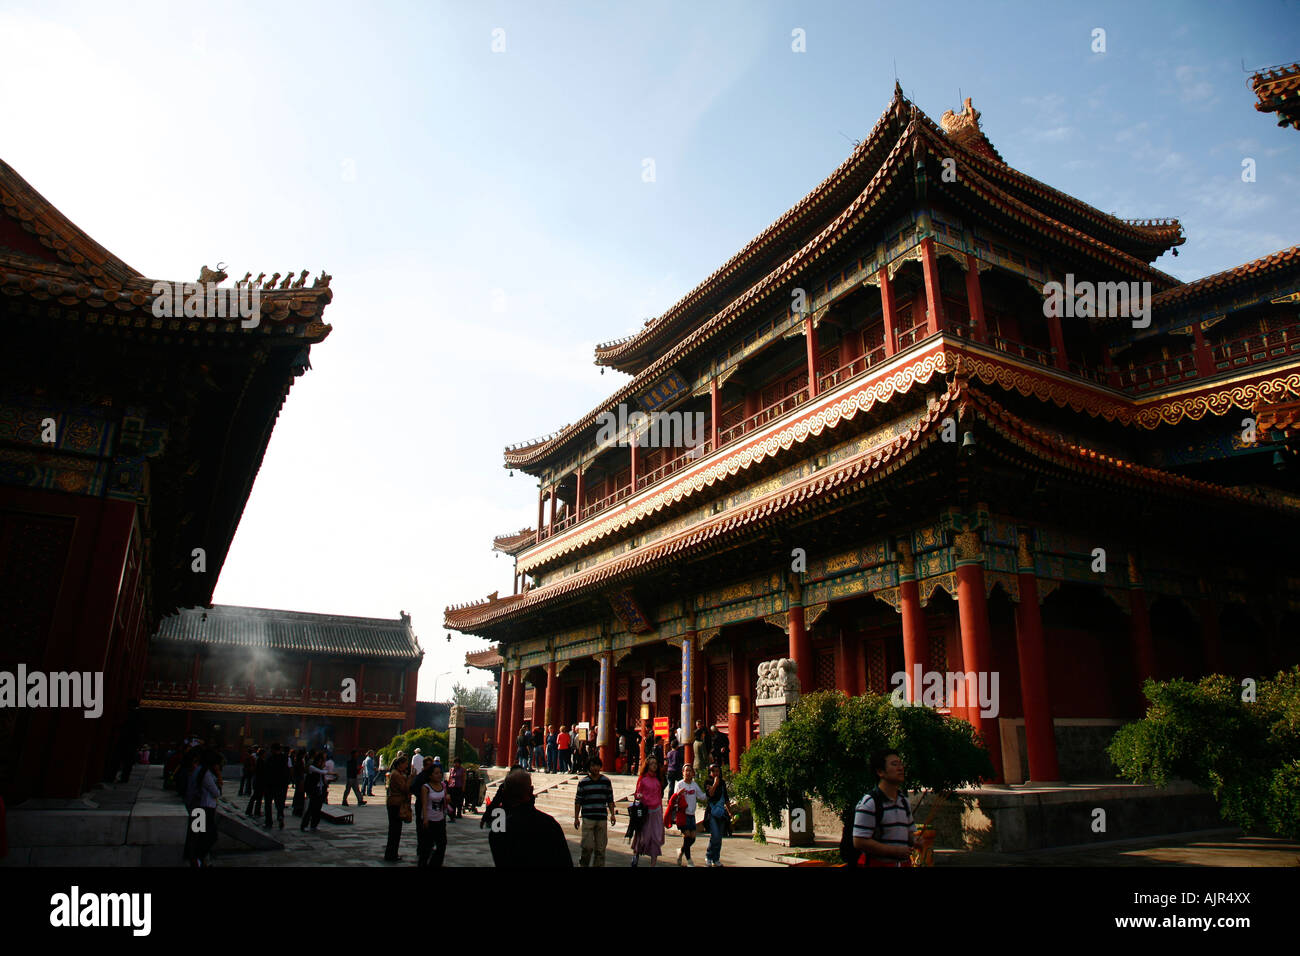 El Templo Lama Beijing China Foto de stock